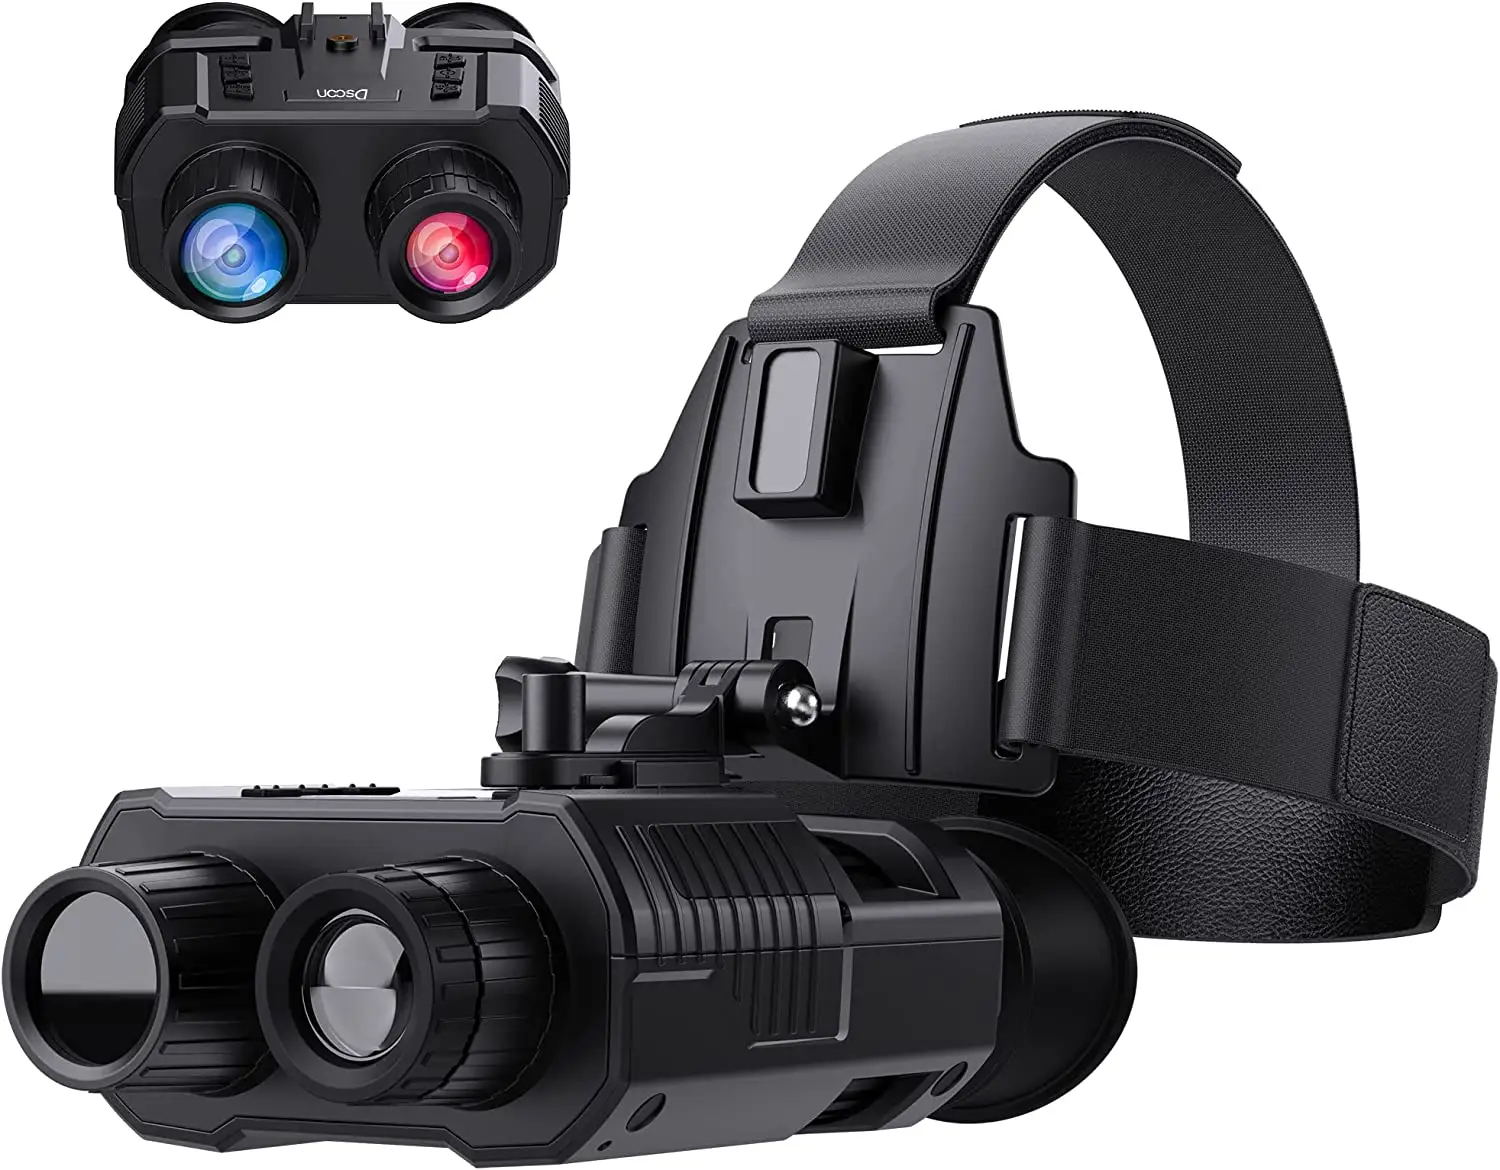 Naked eyes 3D Display hands free tactical night vision binoculars 1080P Digital infrared helmet night vision goggles